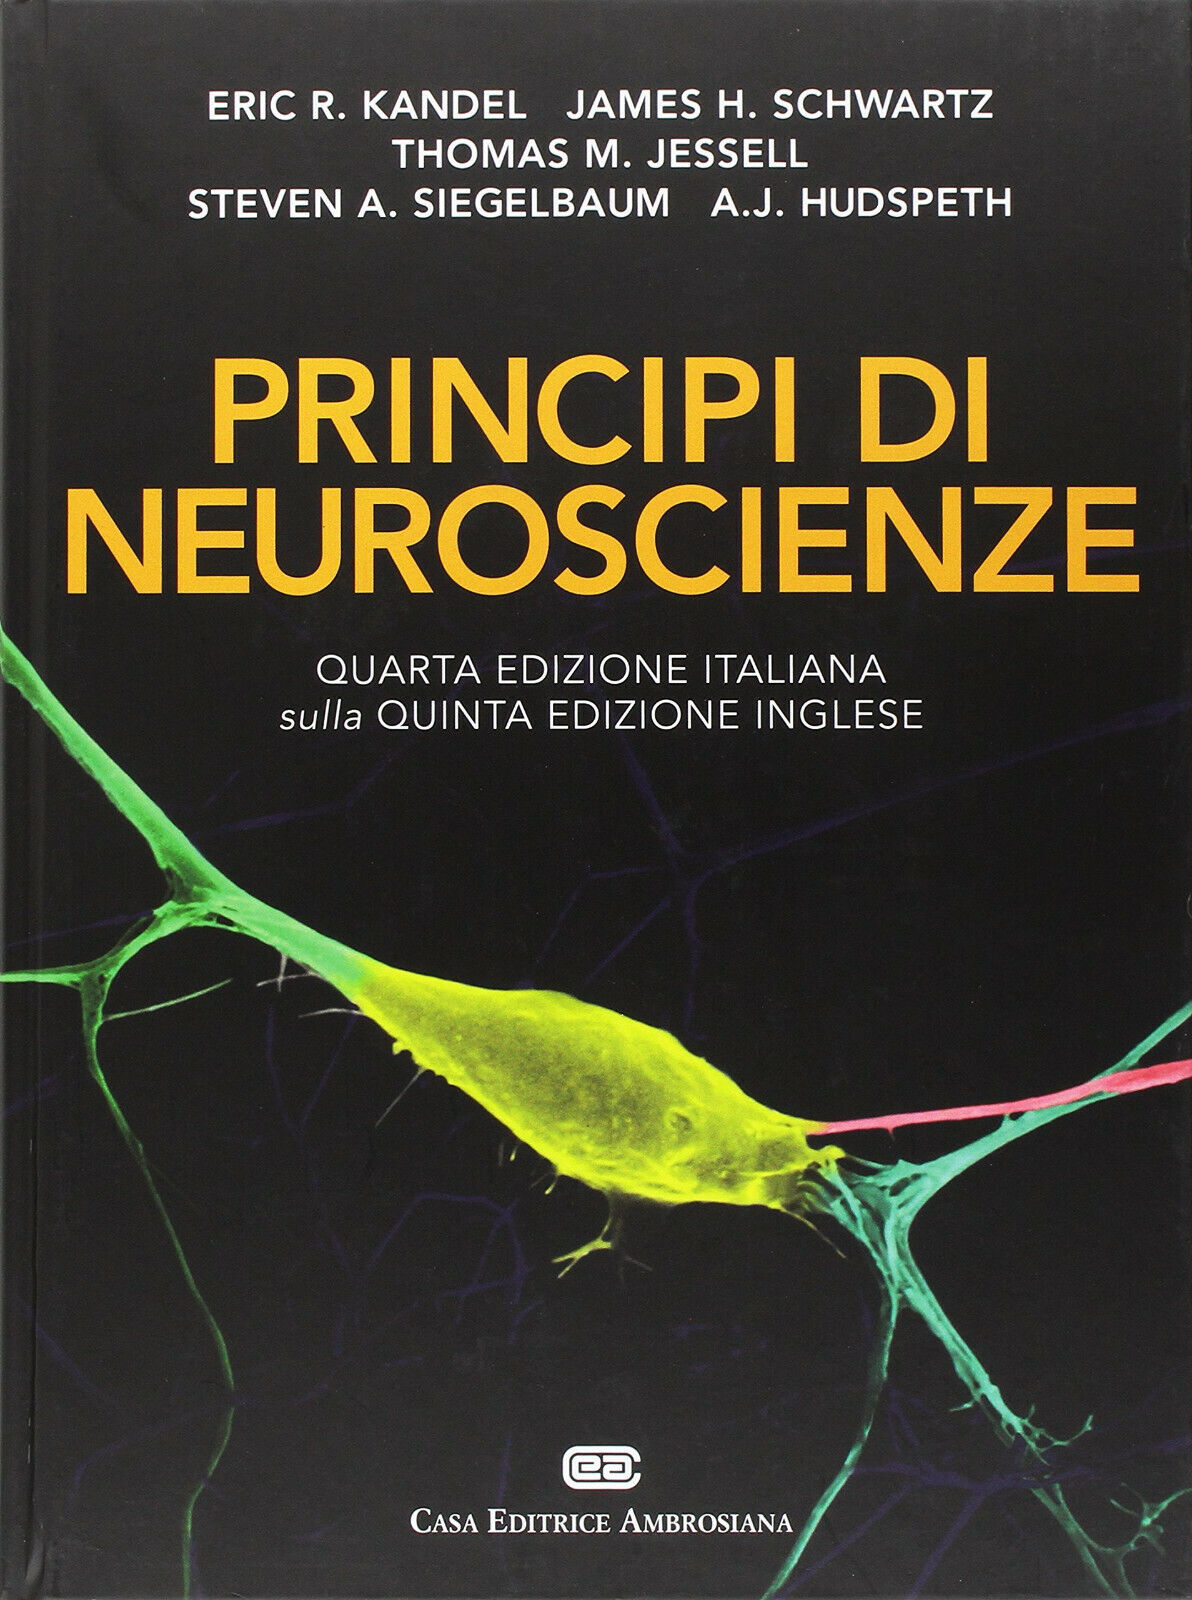 Principi di neuroscienze - Eric R. Kandel, James H. Schwartz - CEA, 2014